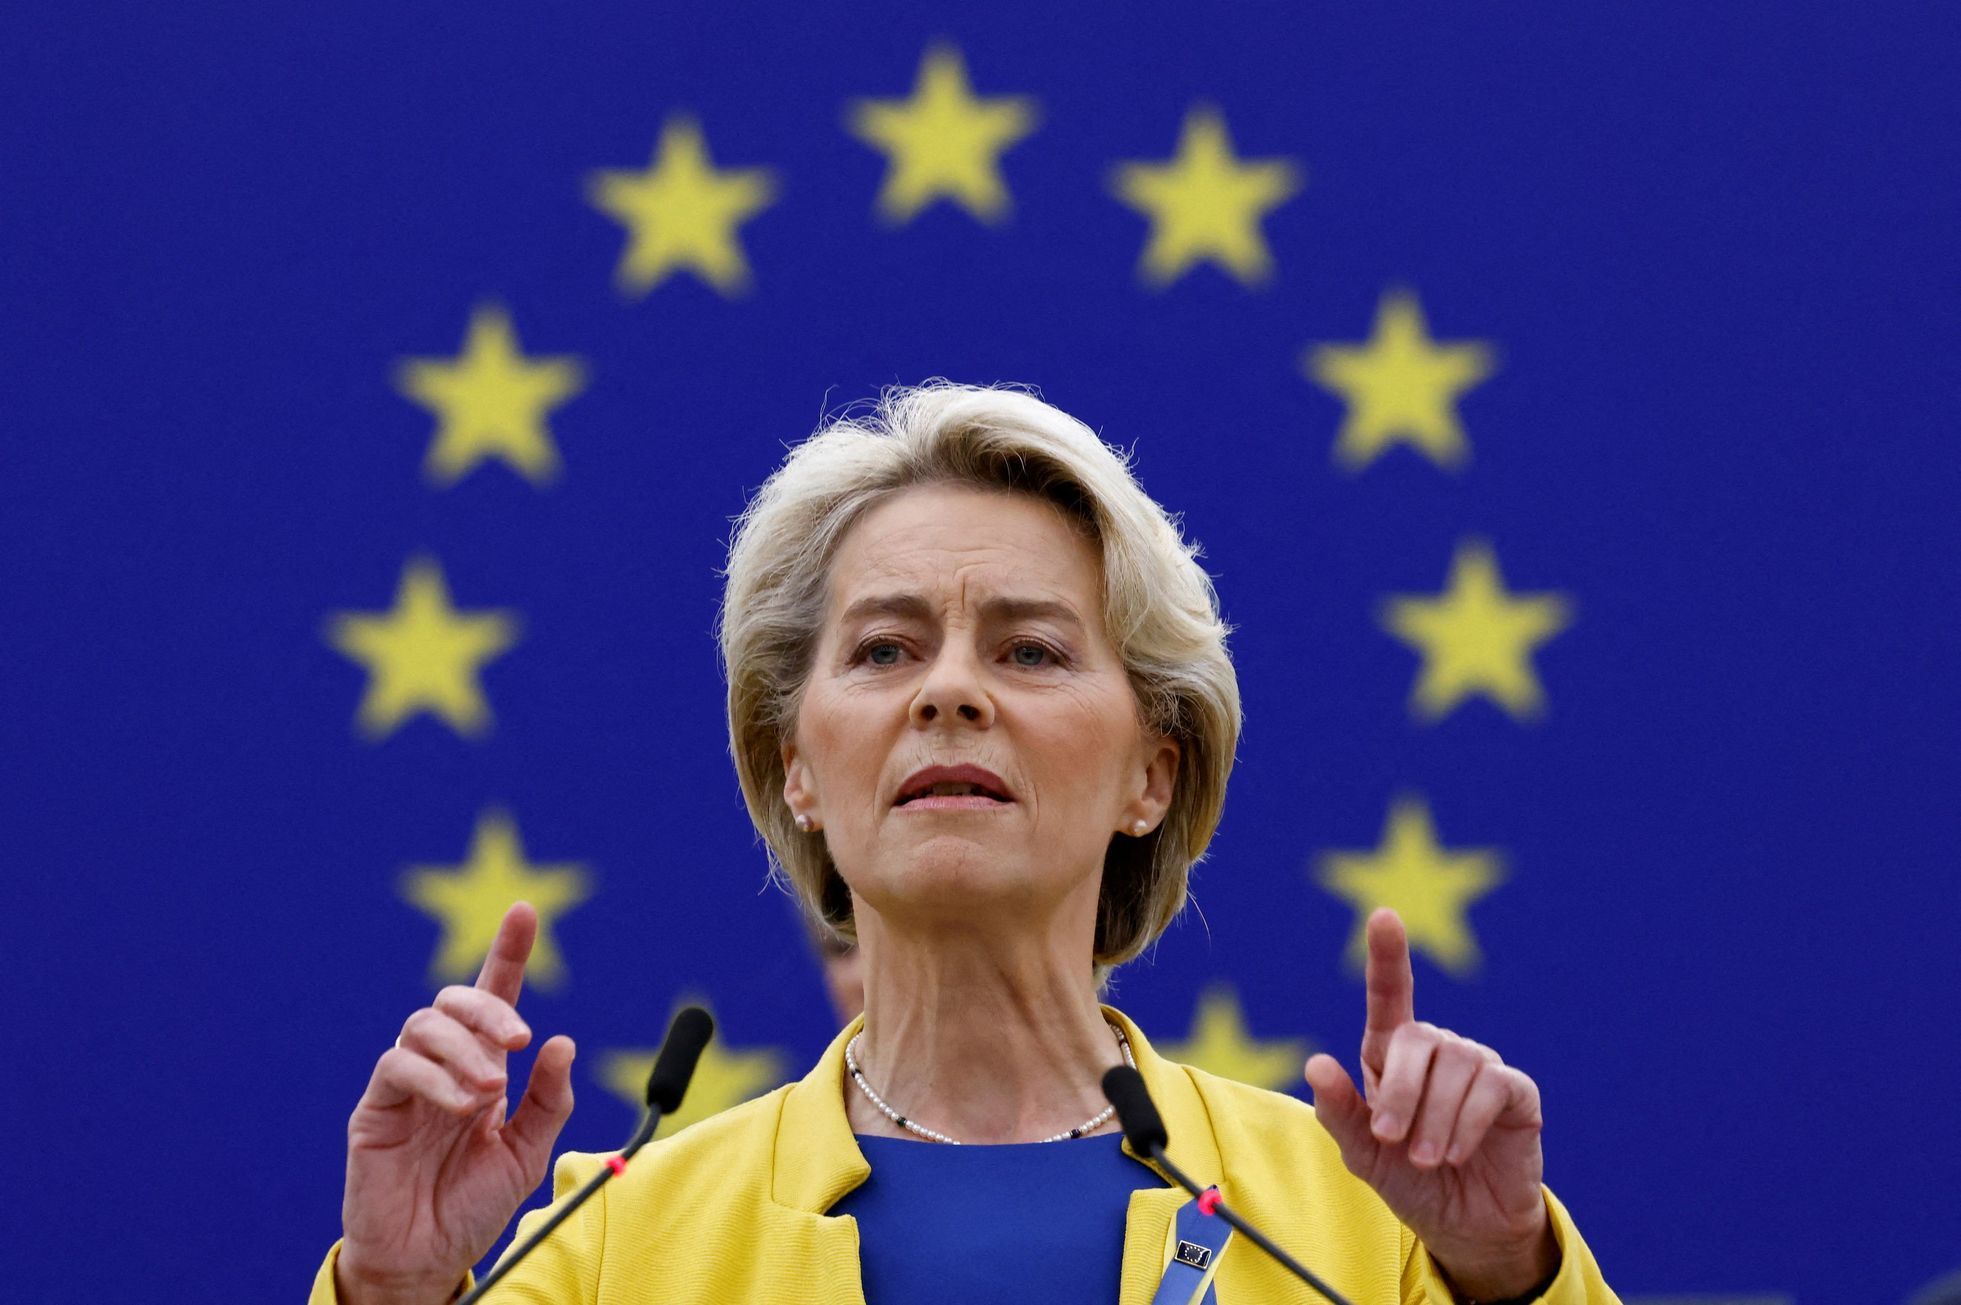 Ursula von der Leyenová během projevu o stavu Evropské unie.